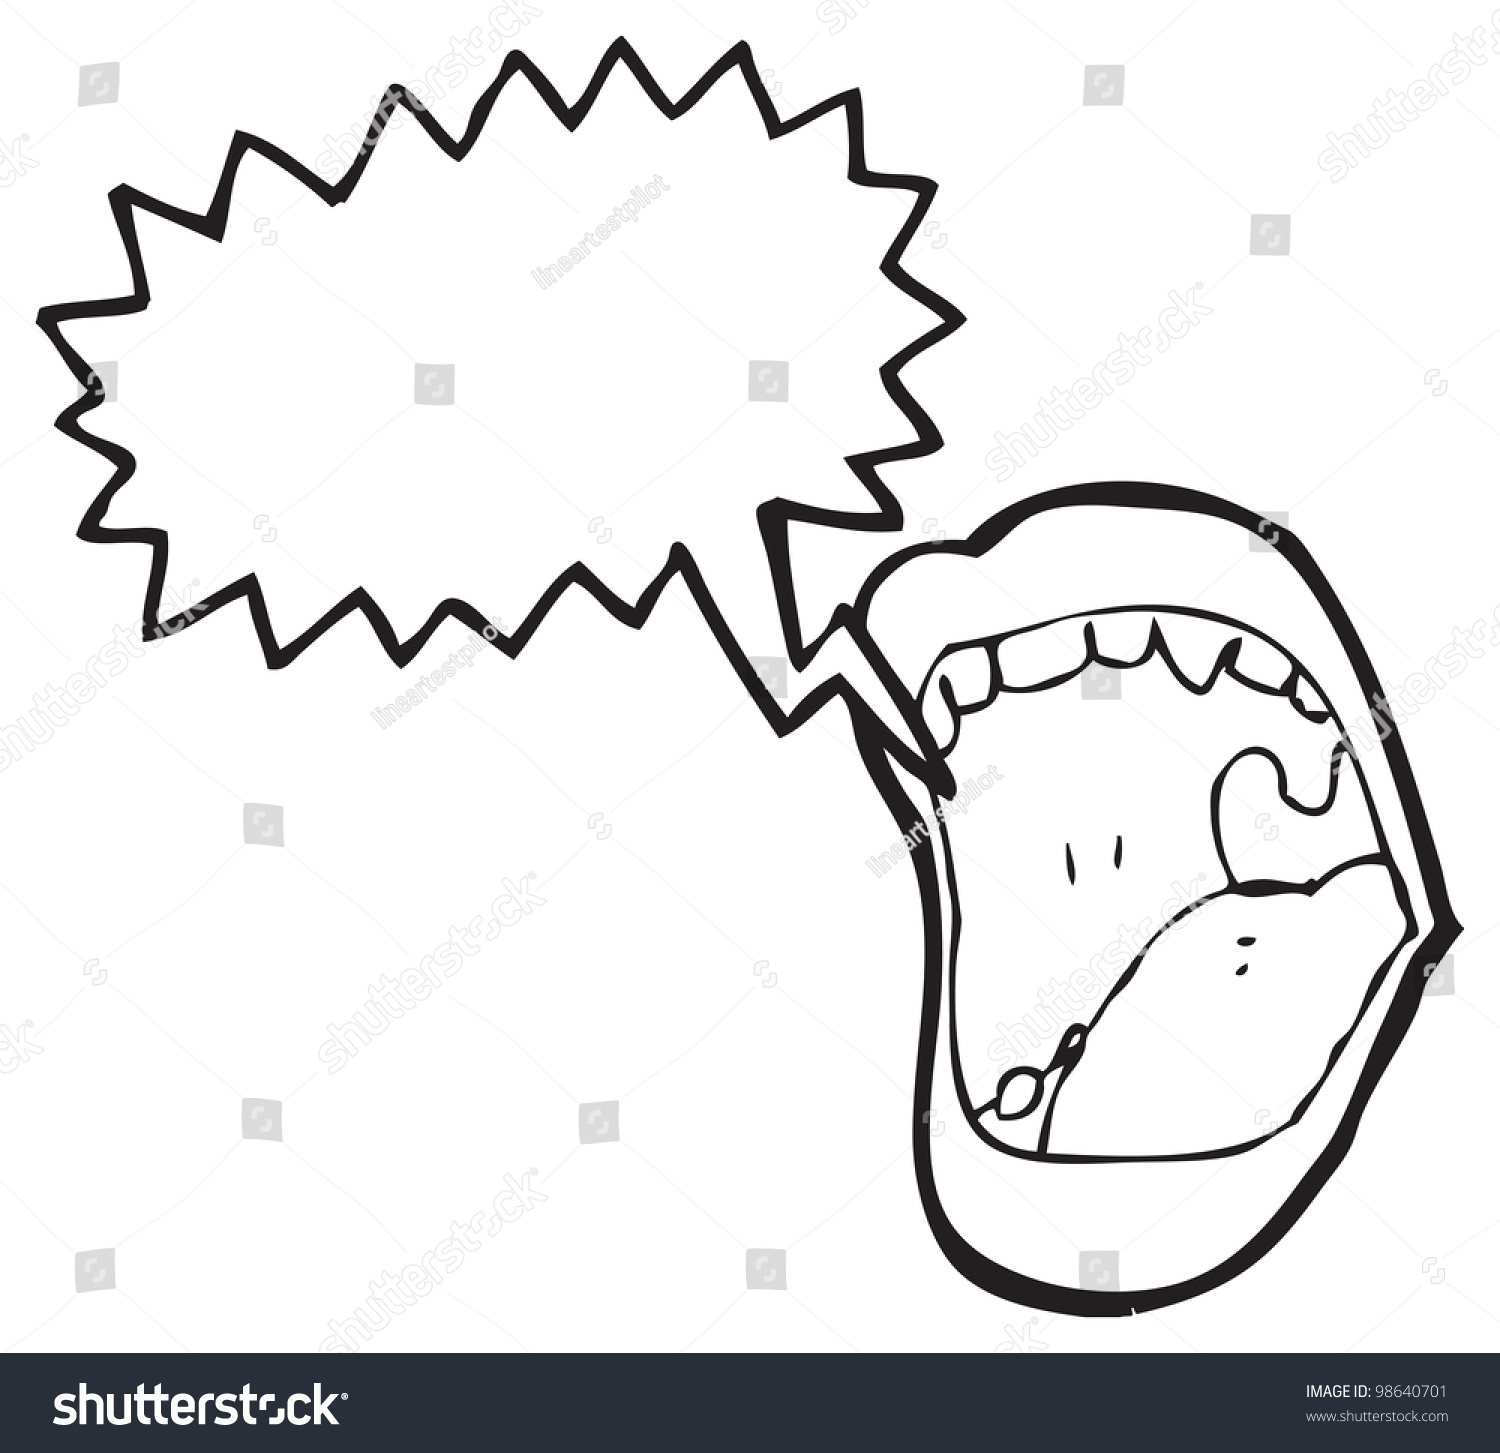 Cartoon Talking Mouth Stock Photo 98640701 : Shutterstock